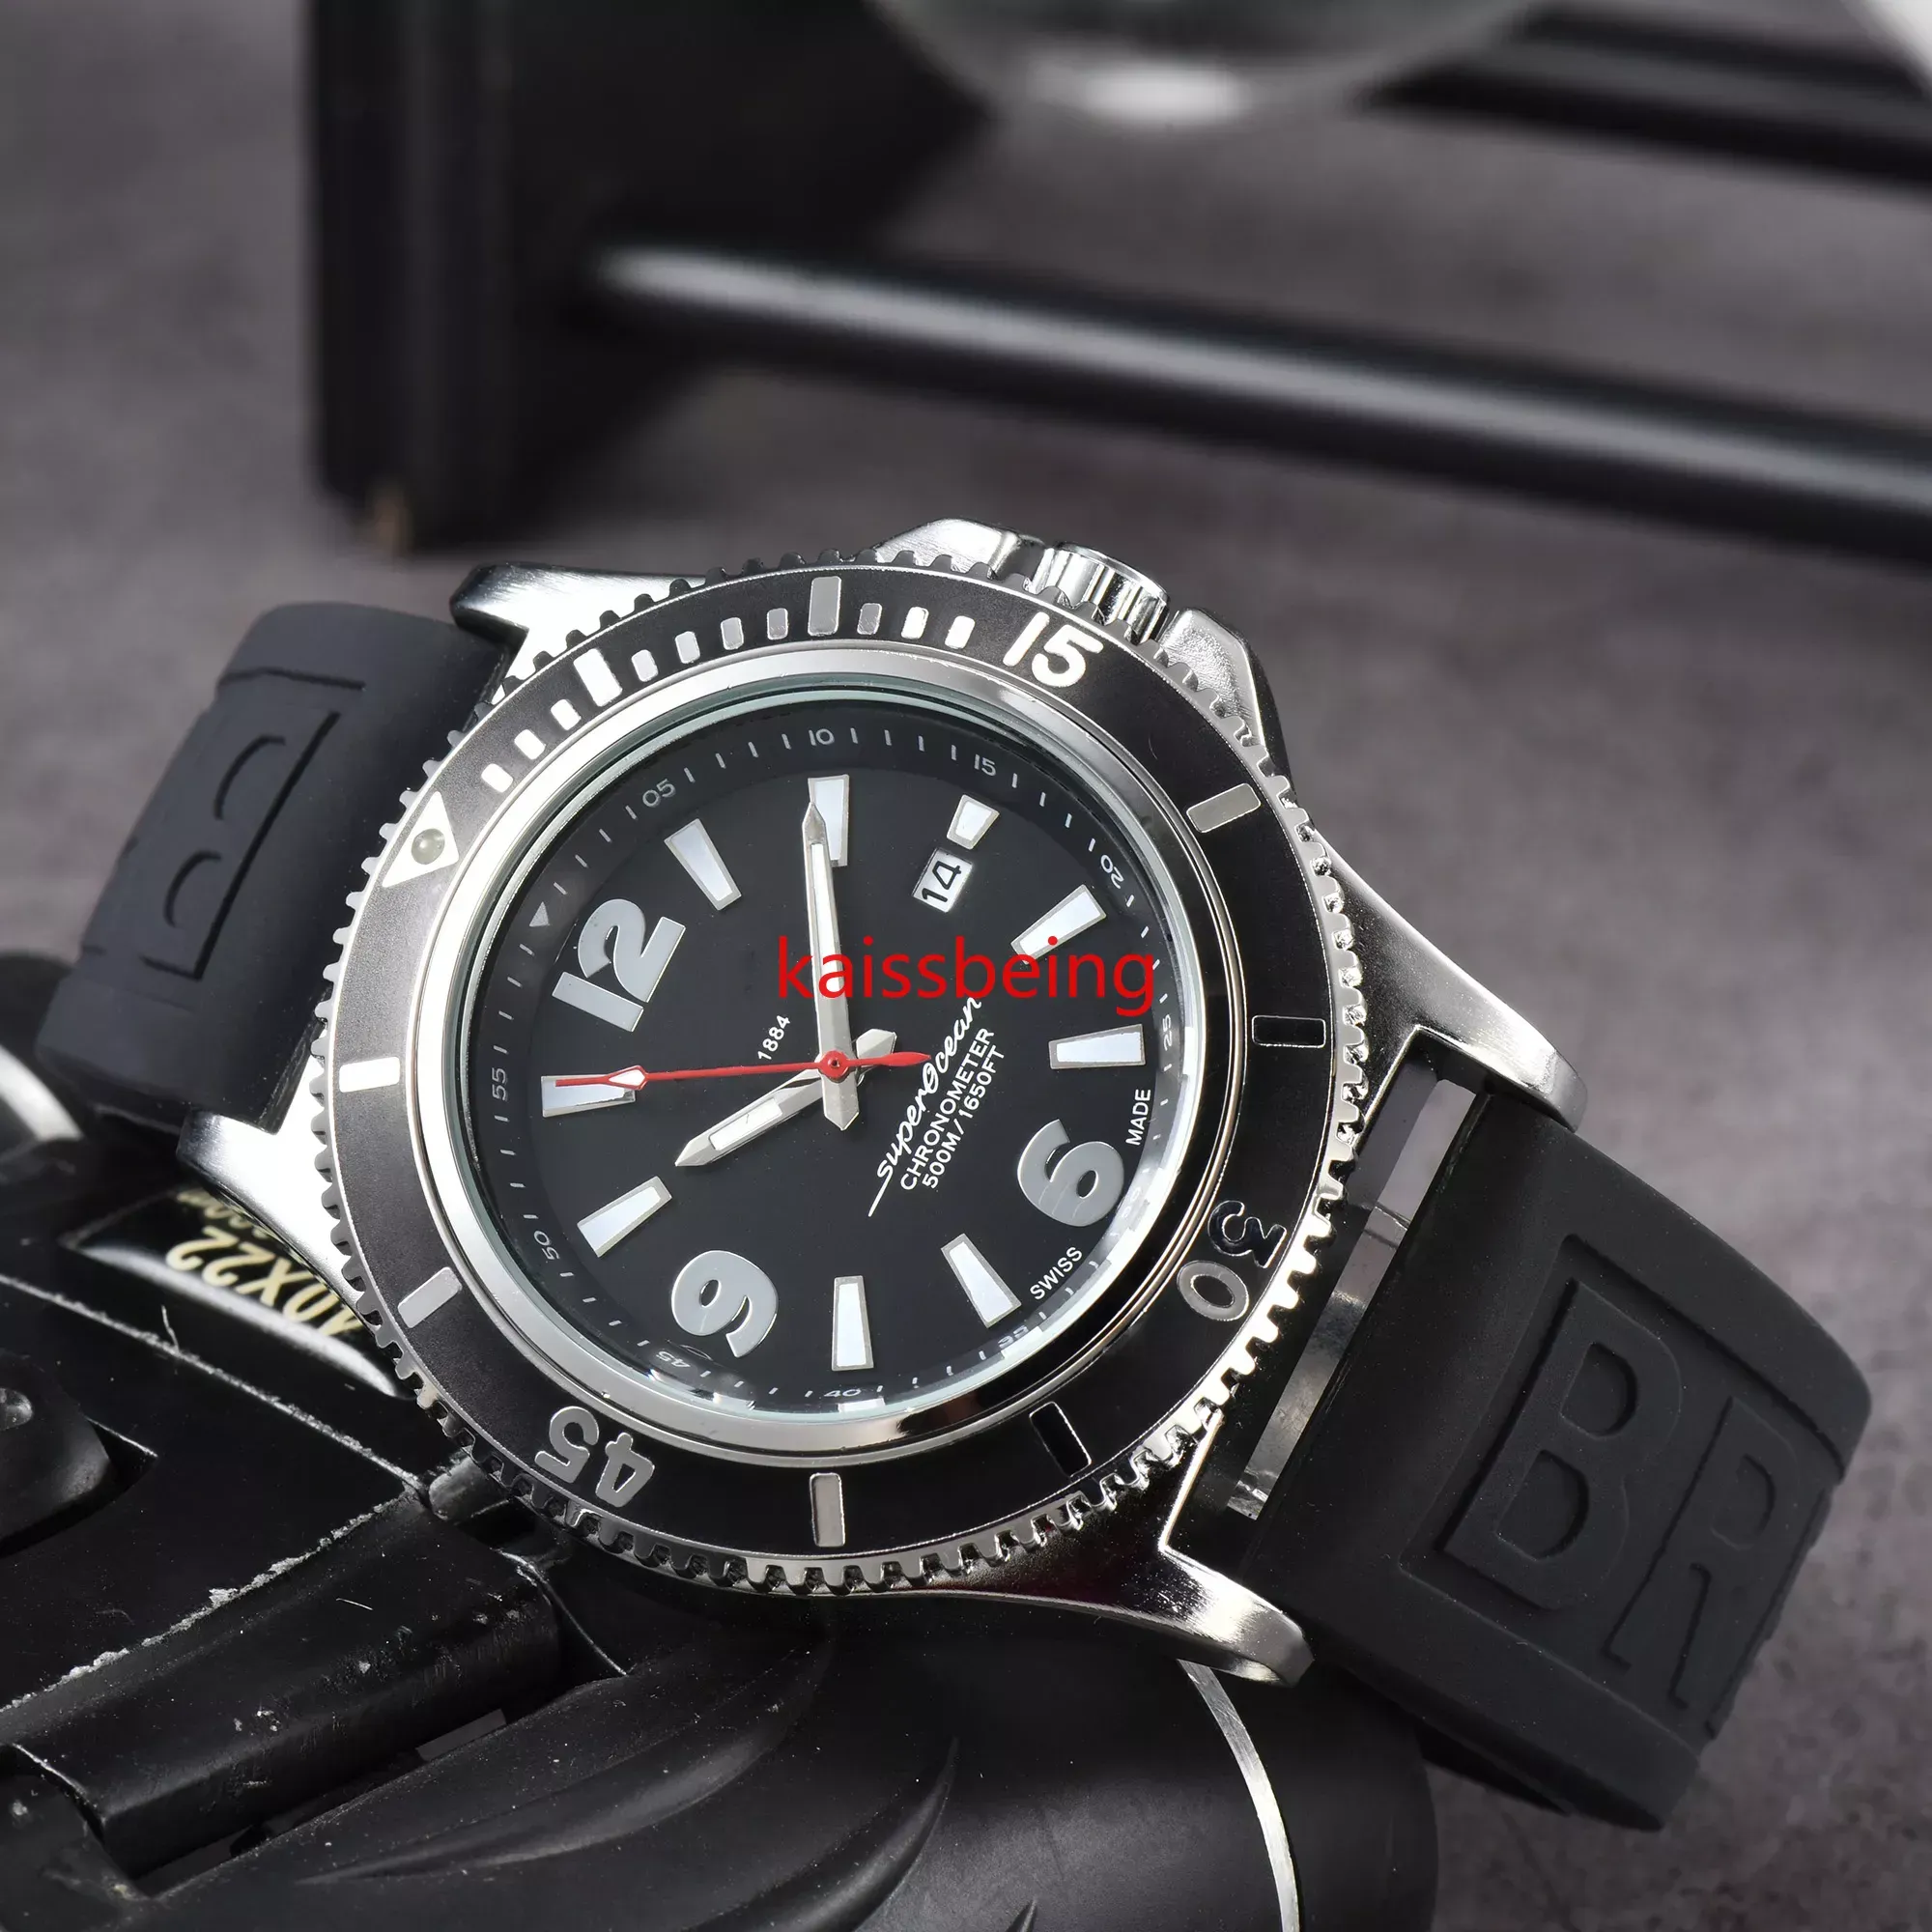 des Breitl Wrist Watches for men 1884 Watches Three needles Quartz Watch High Quality Top Luxury Brand Clock calendar function Super Fashion Rubber Strap